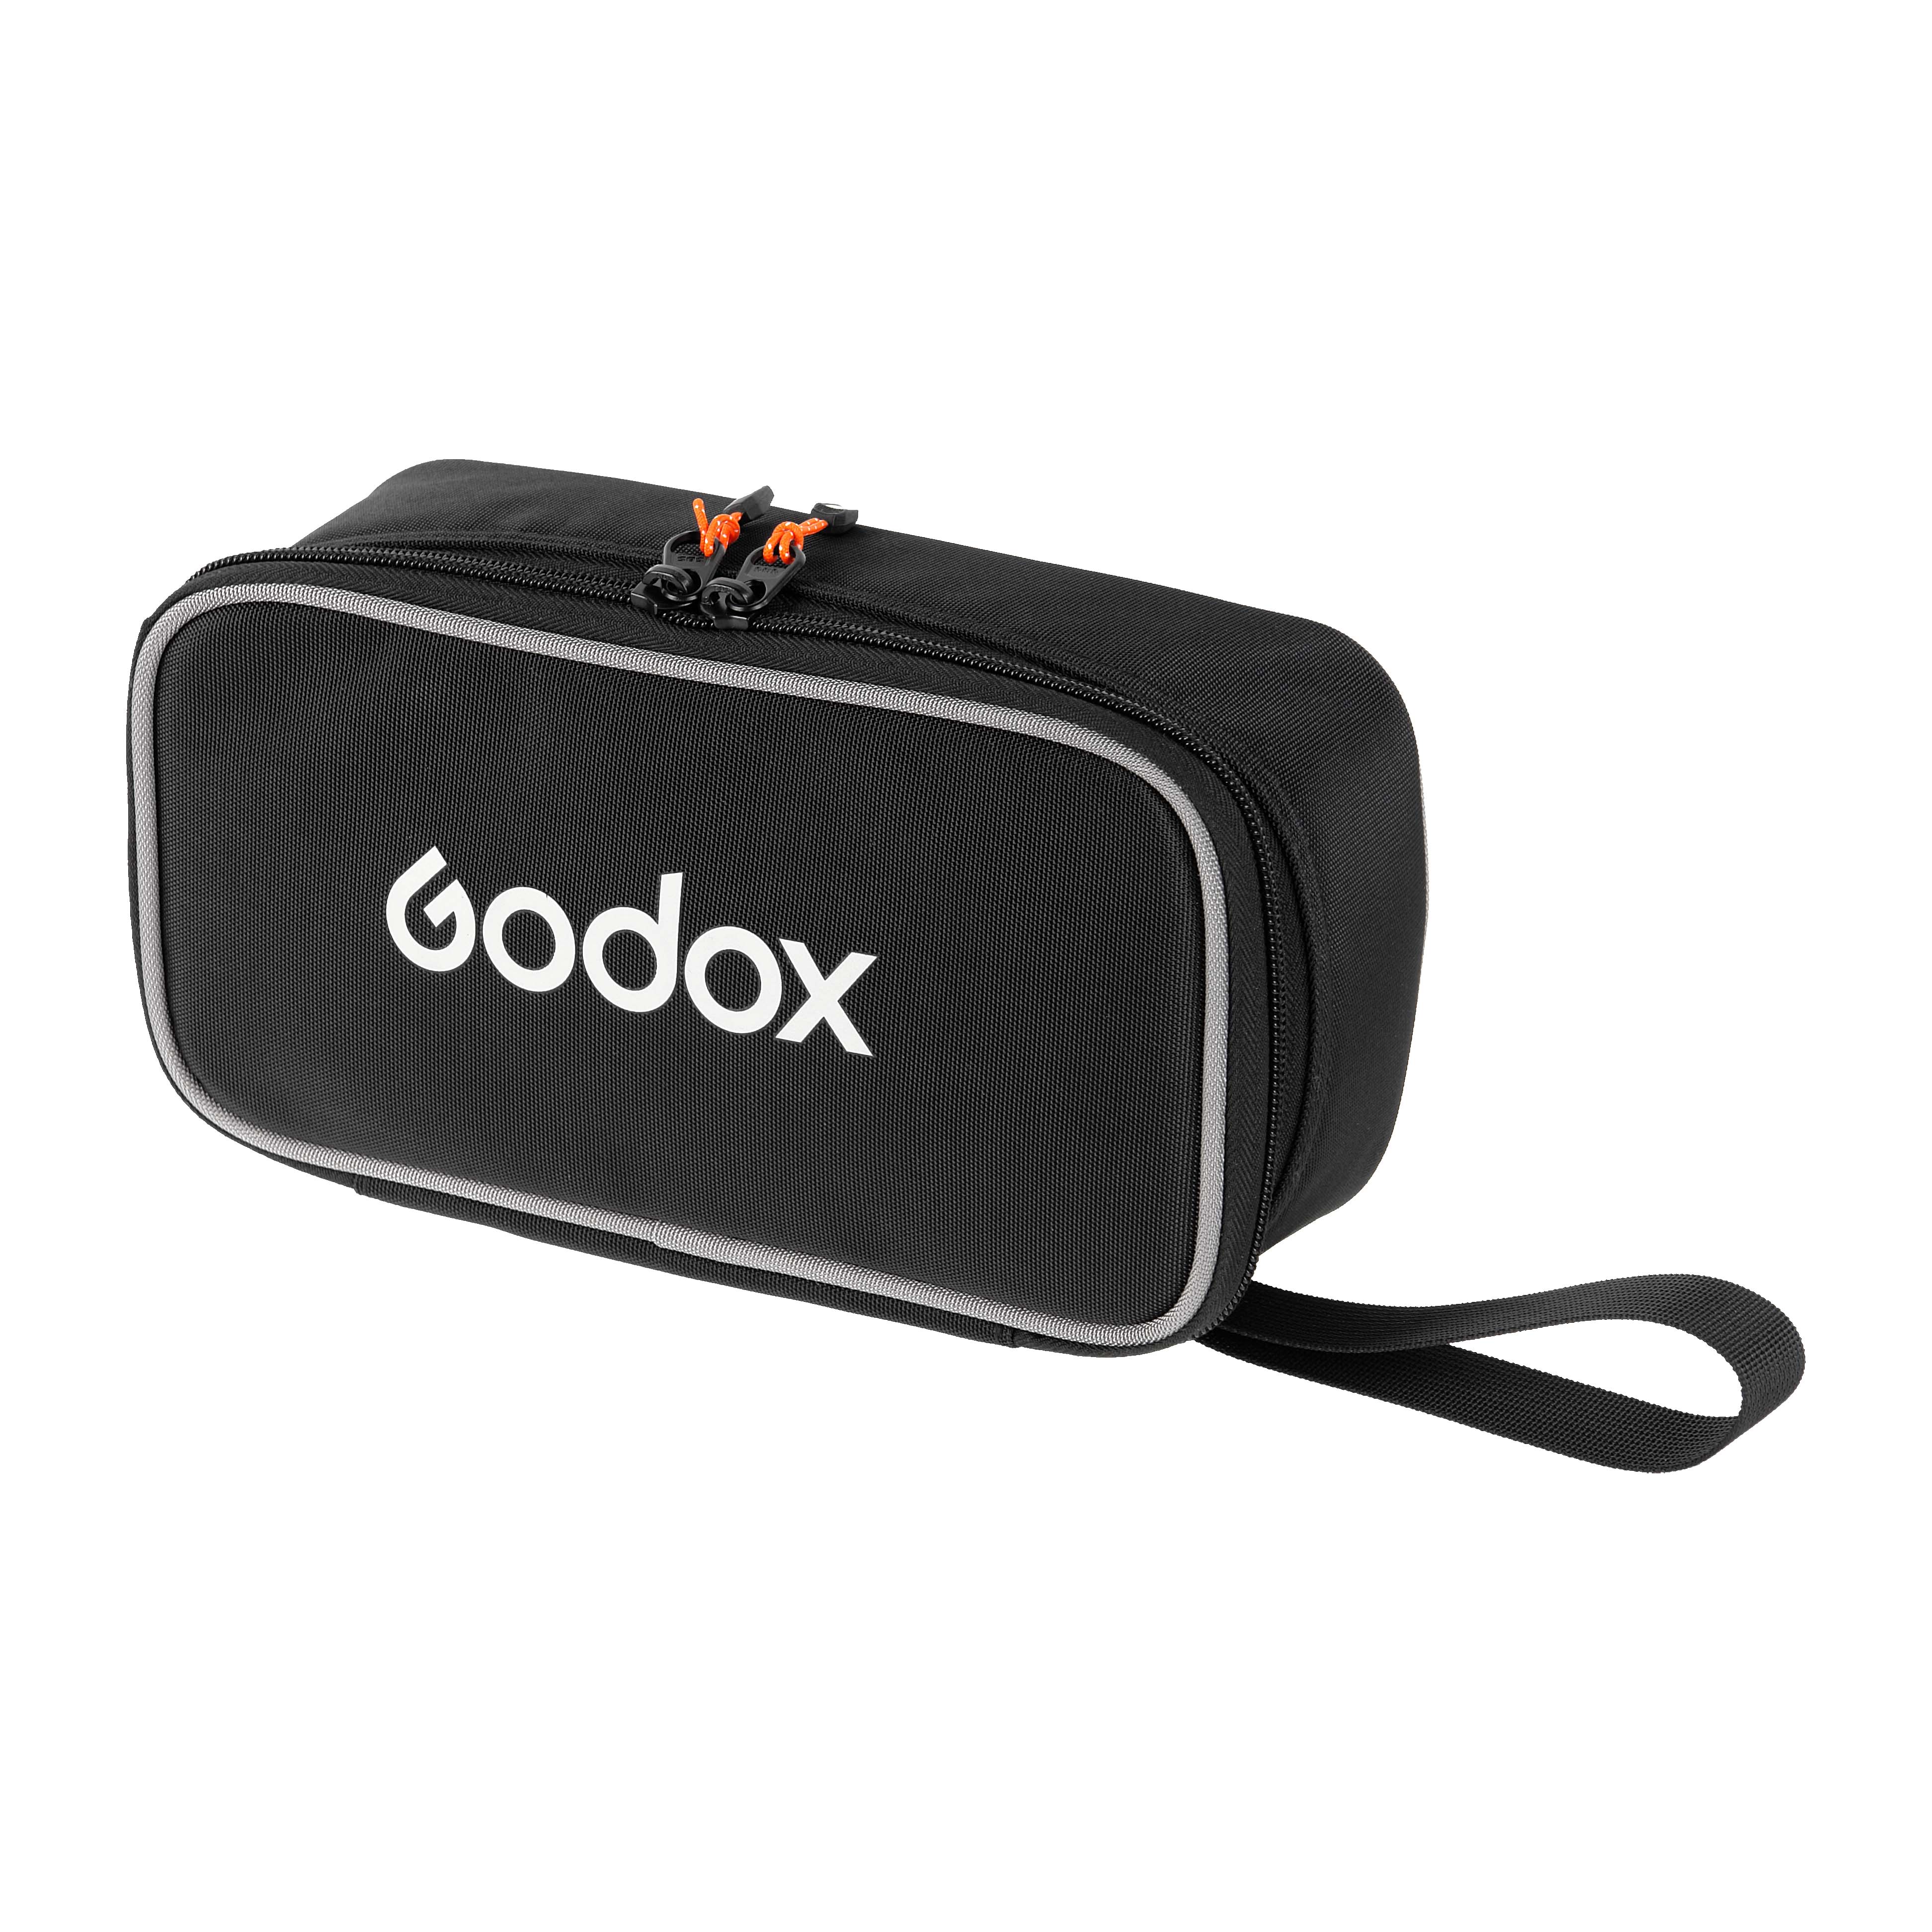   Godox CB56    R200   Ultra-mart